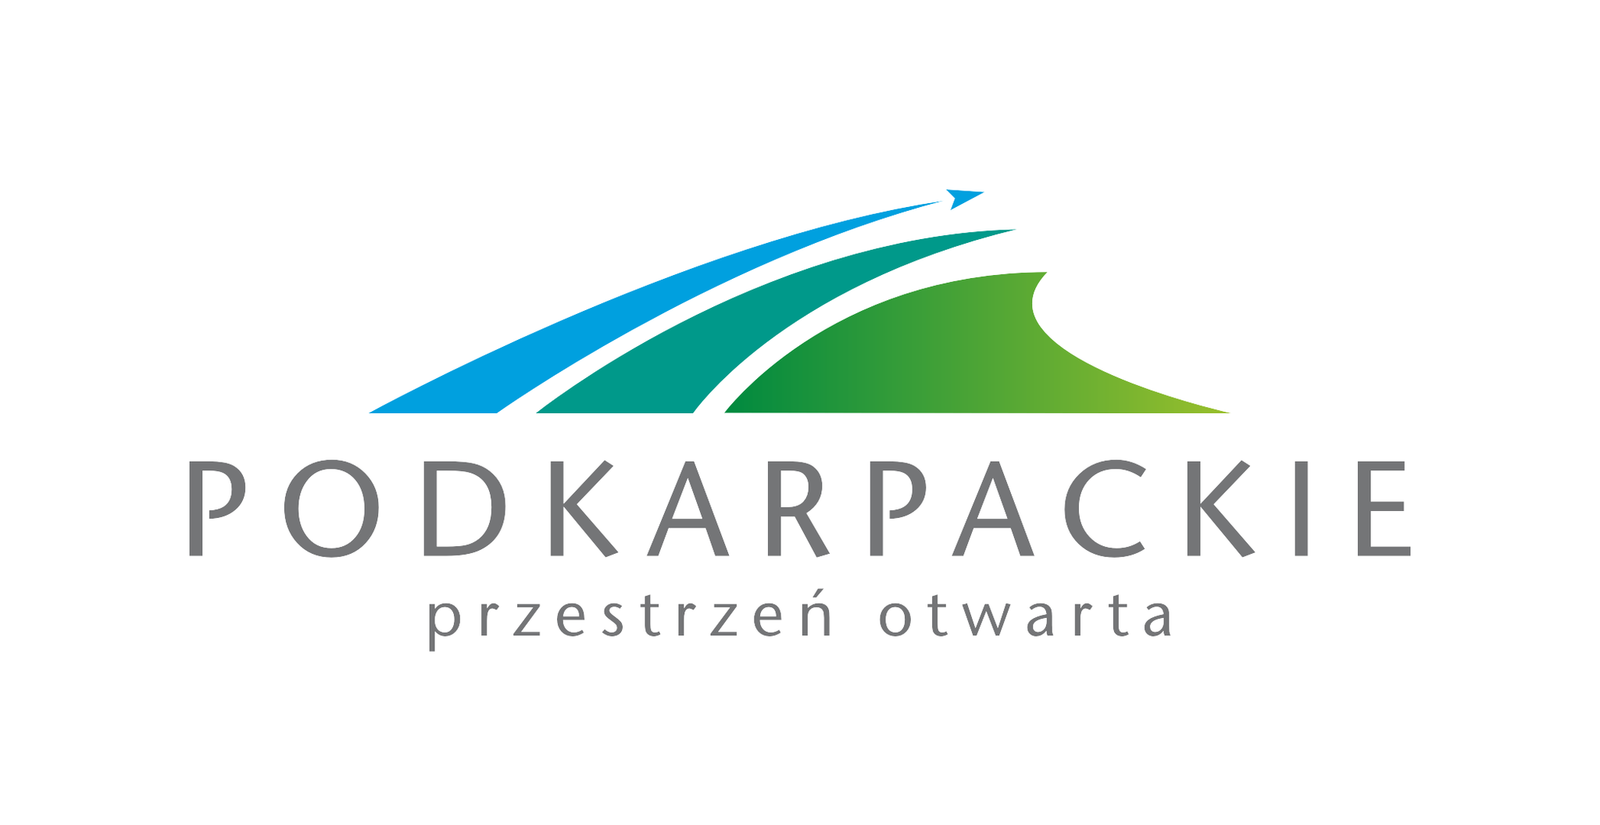 podkarpackie_logo.png